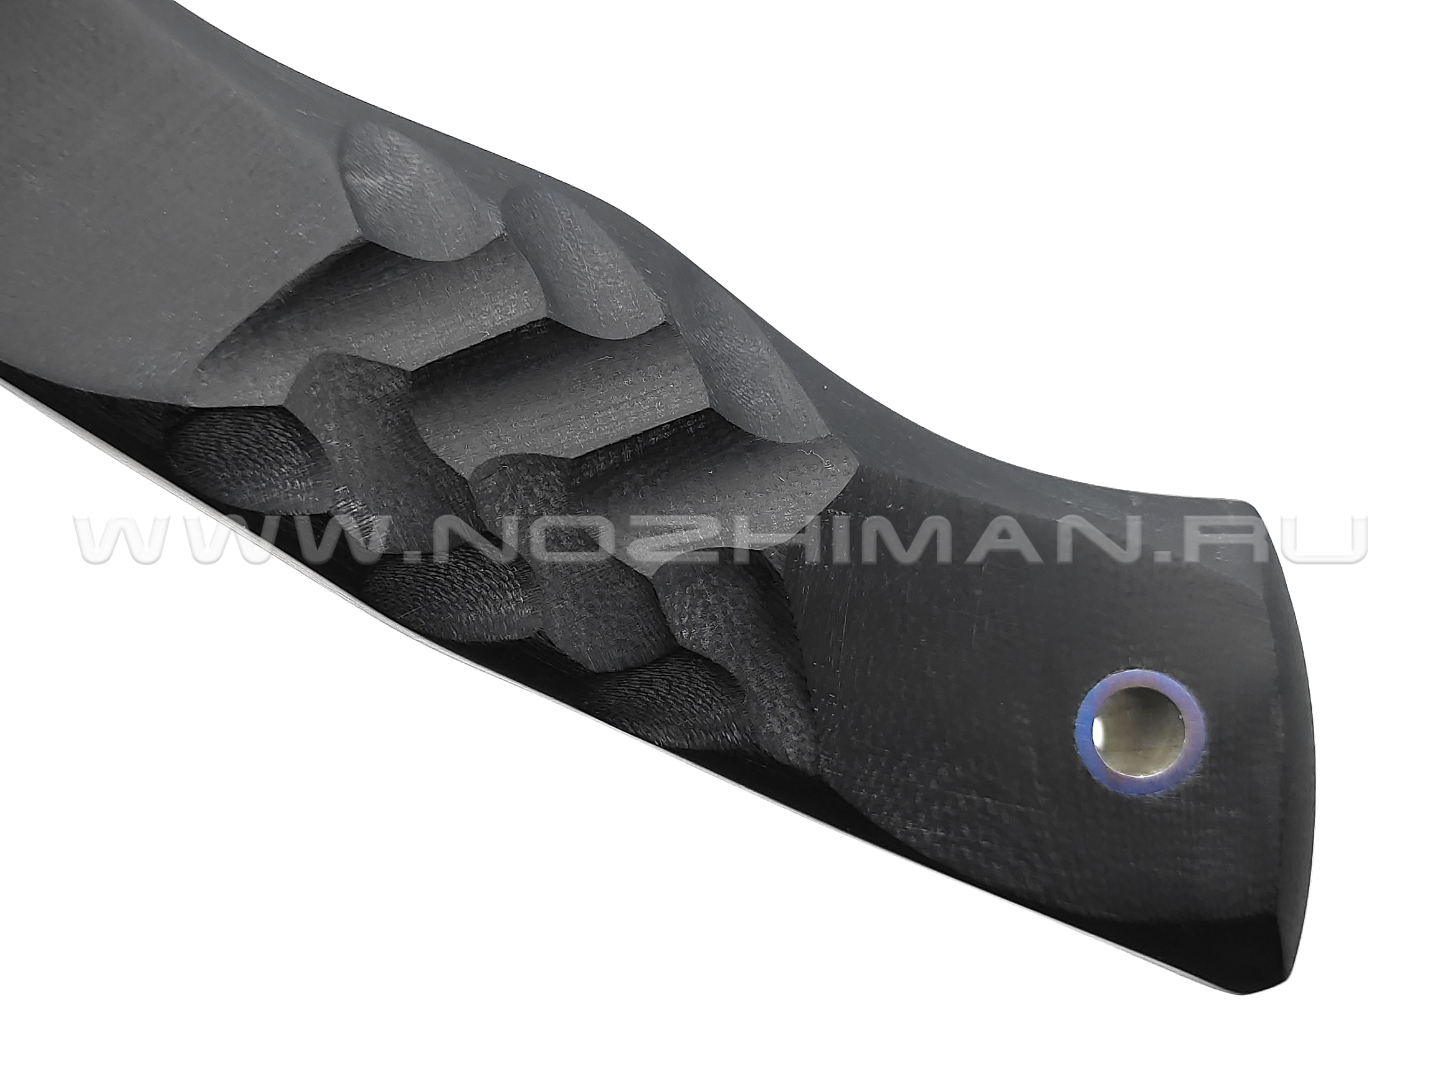 Neyris Knives нож TechnoToa сталь CPM 3V, рукоять G10 black